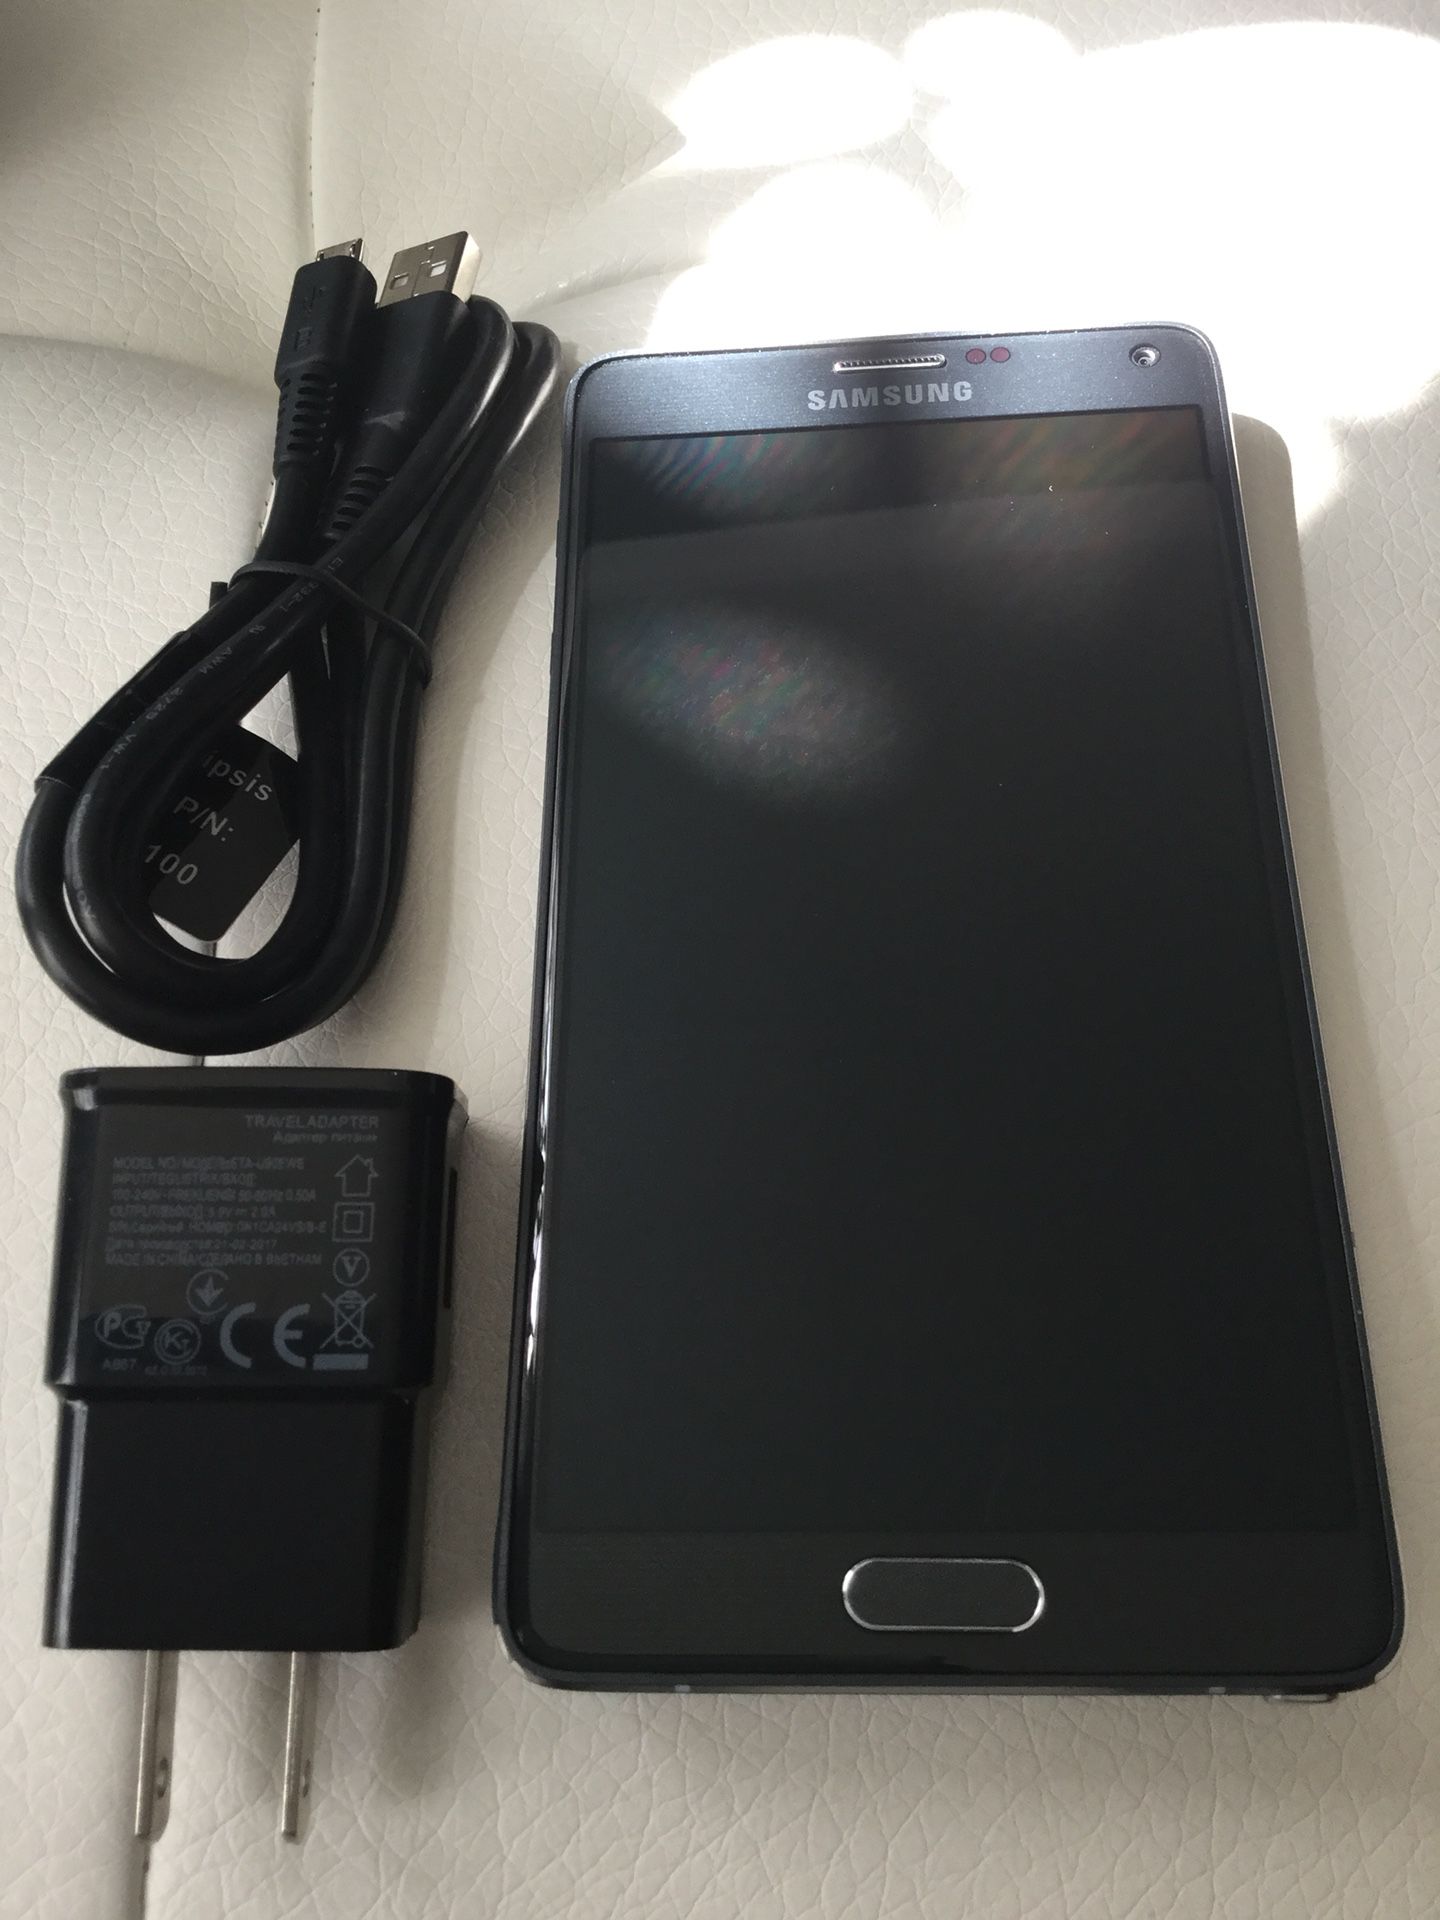 Samsung Galaxy Note 4, Unlocked, 32GB, New Condition!